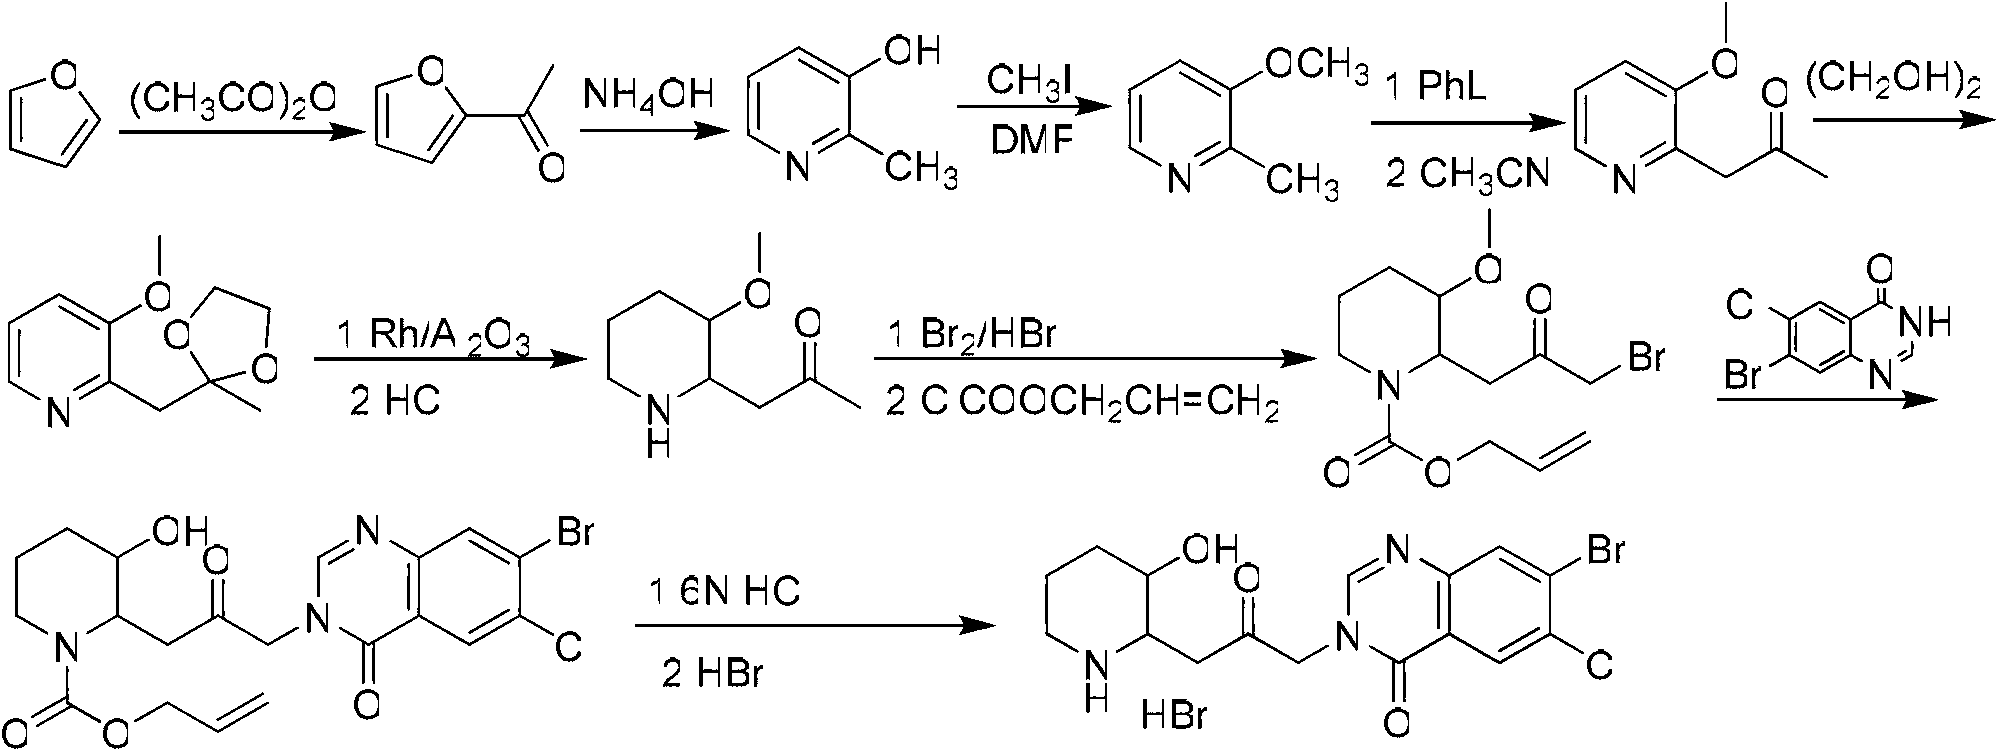 Method for preparing halofuginone hydrobromide